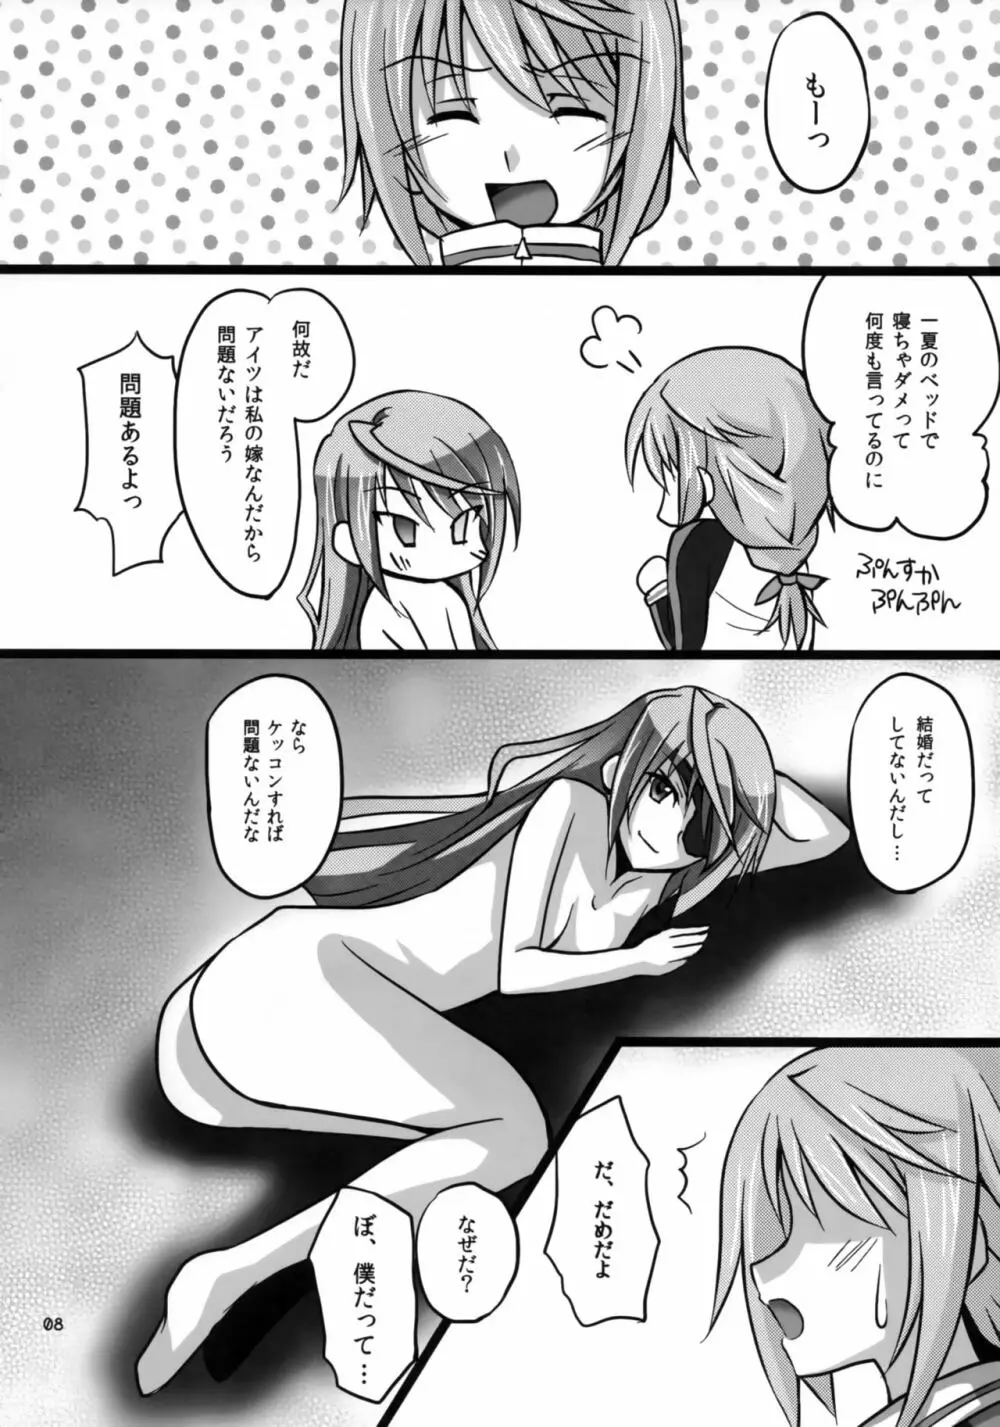 IchikaとSexしたい - page7